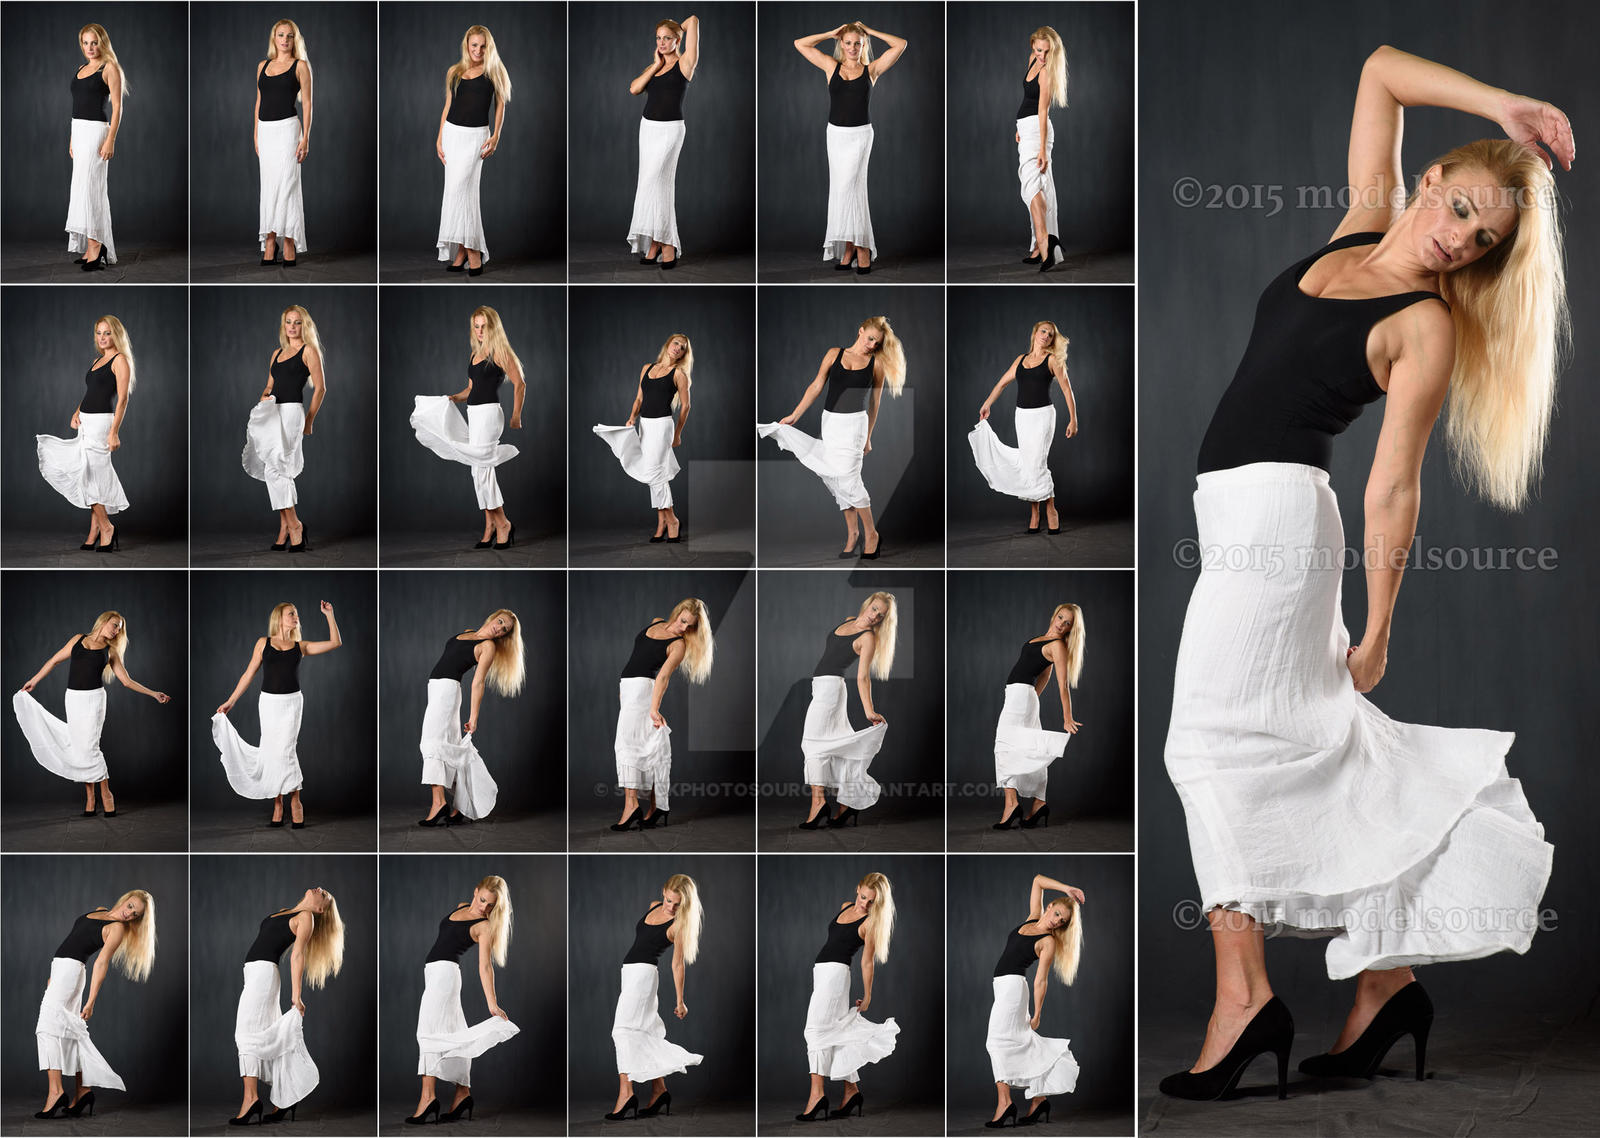 Stock: Gianna Moving in Long Skirt - 24 Images